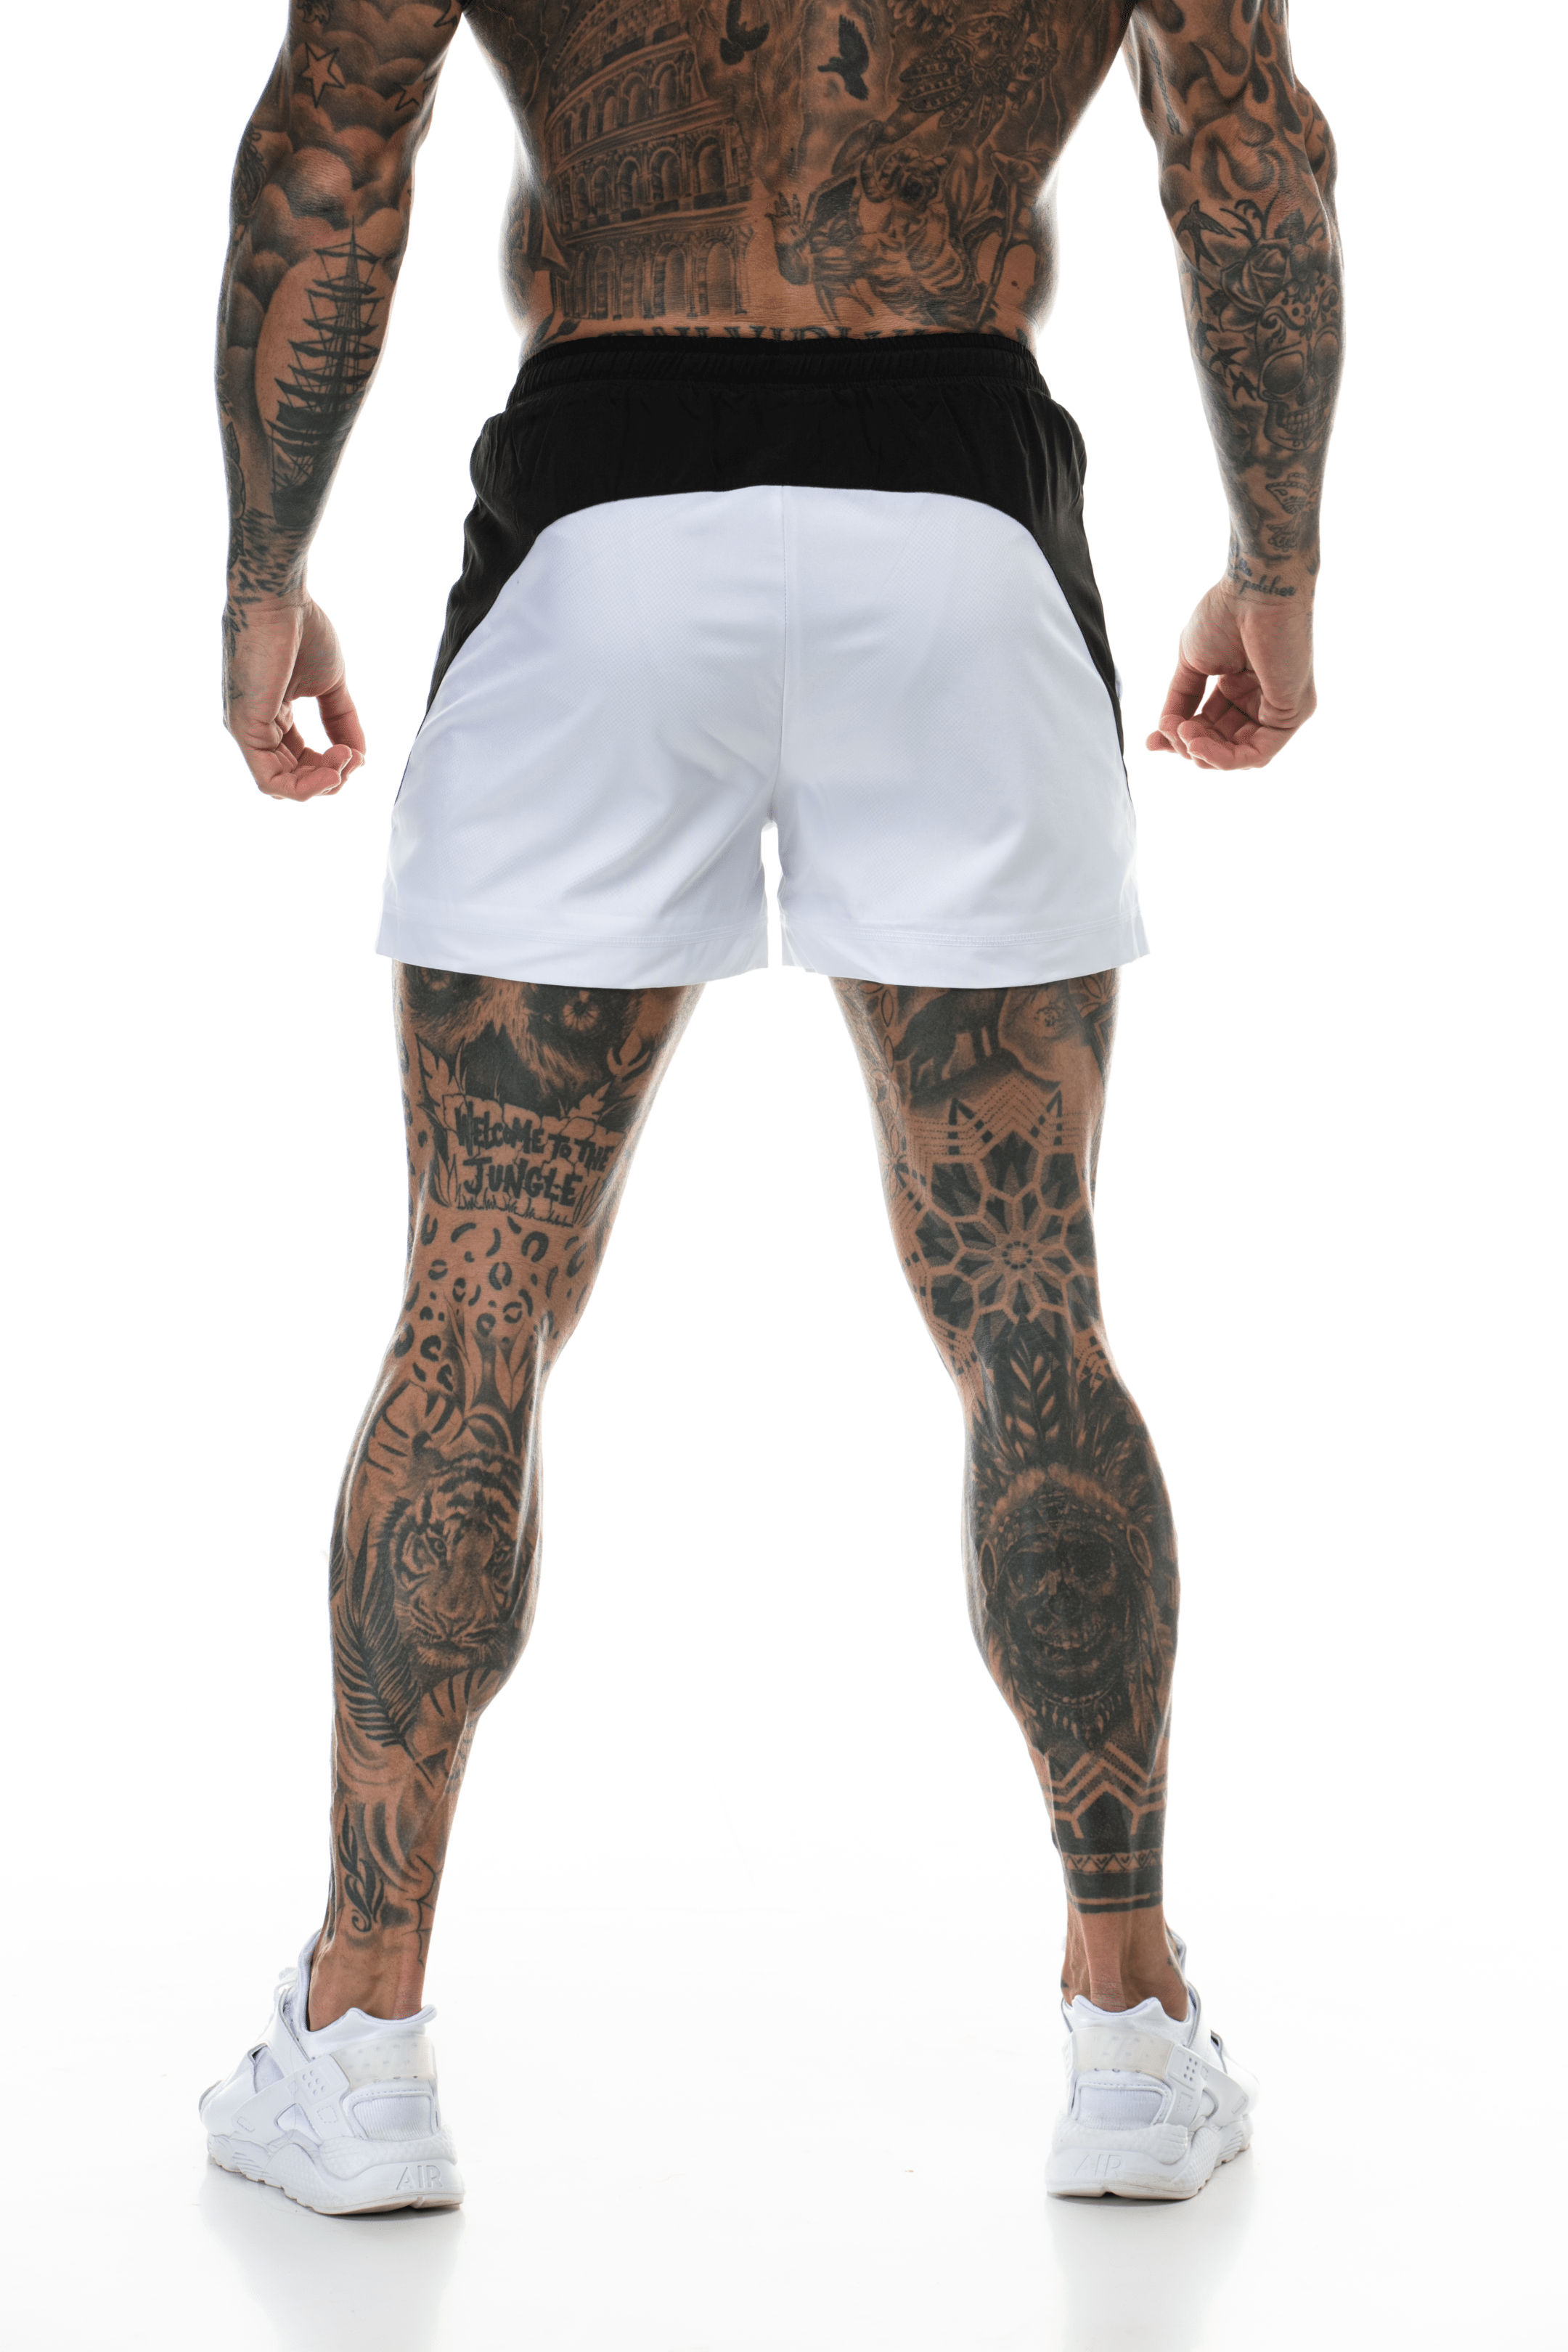 GymFreak Mens Pro Shorts - White - 3.5 inch